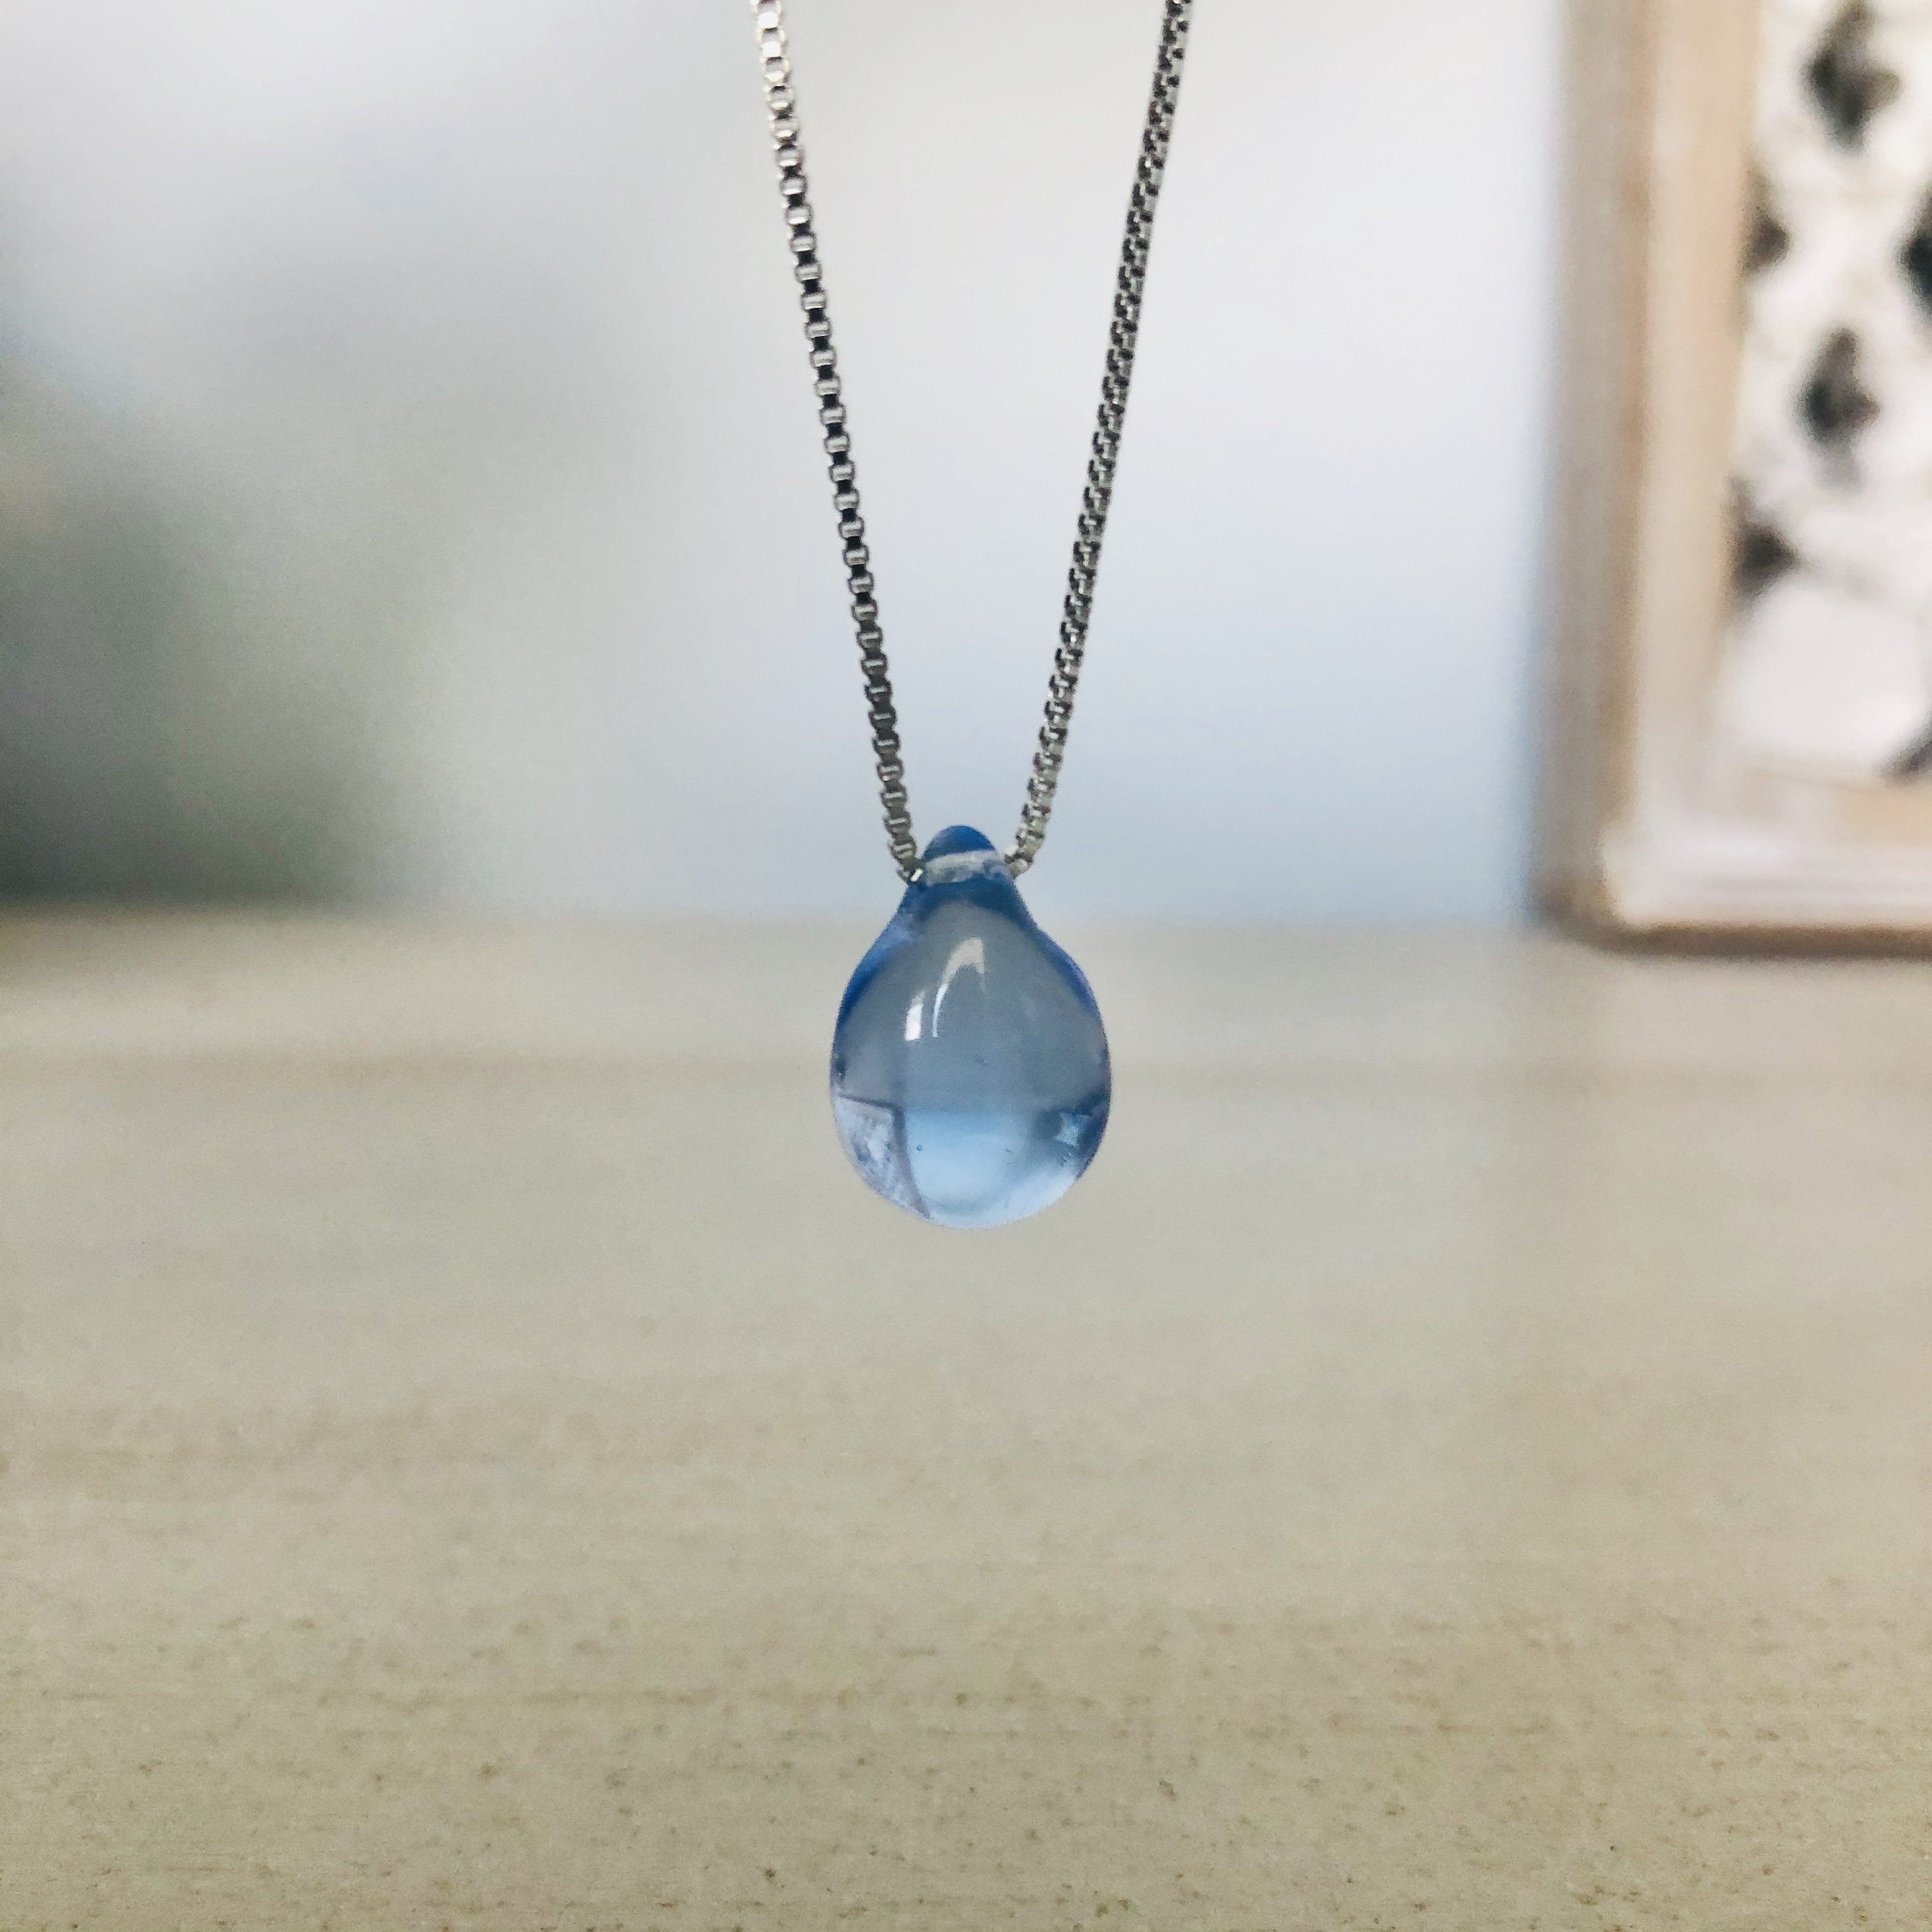 Murano Glass Pendant Necklaces - Luke Adams Glass Blowing Studio